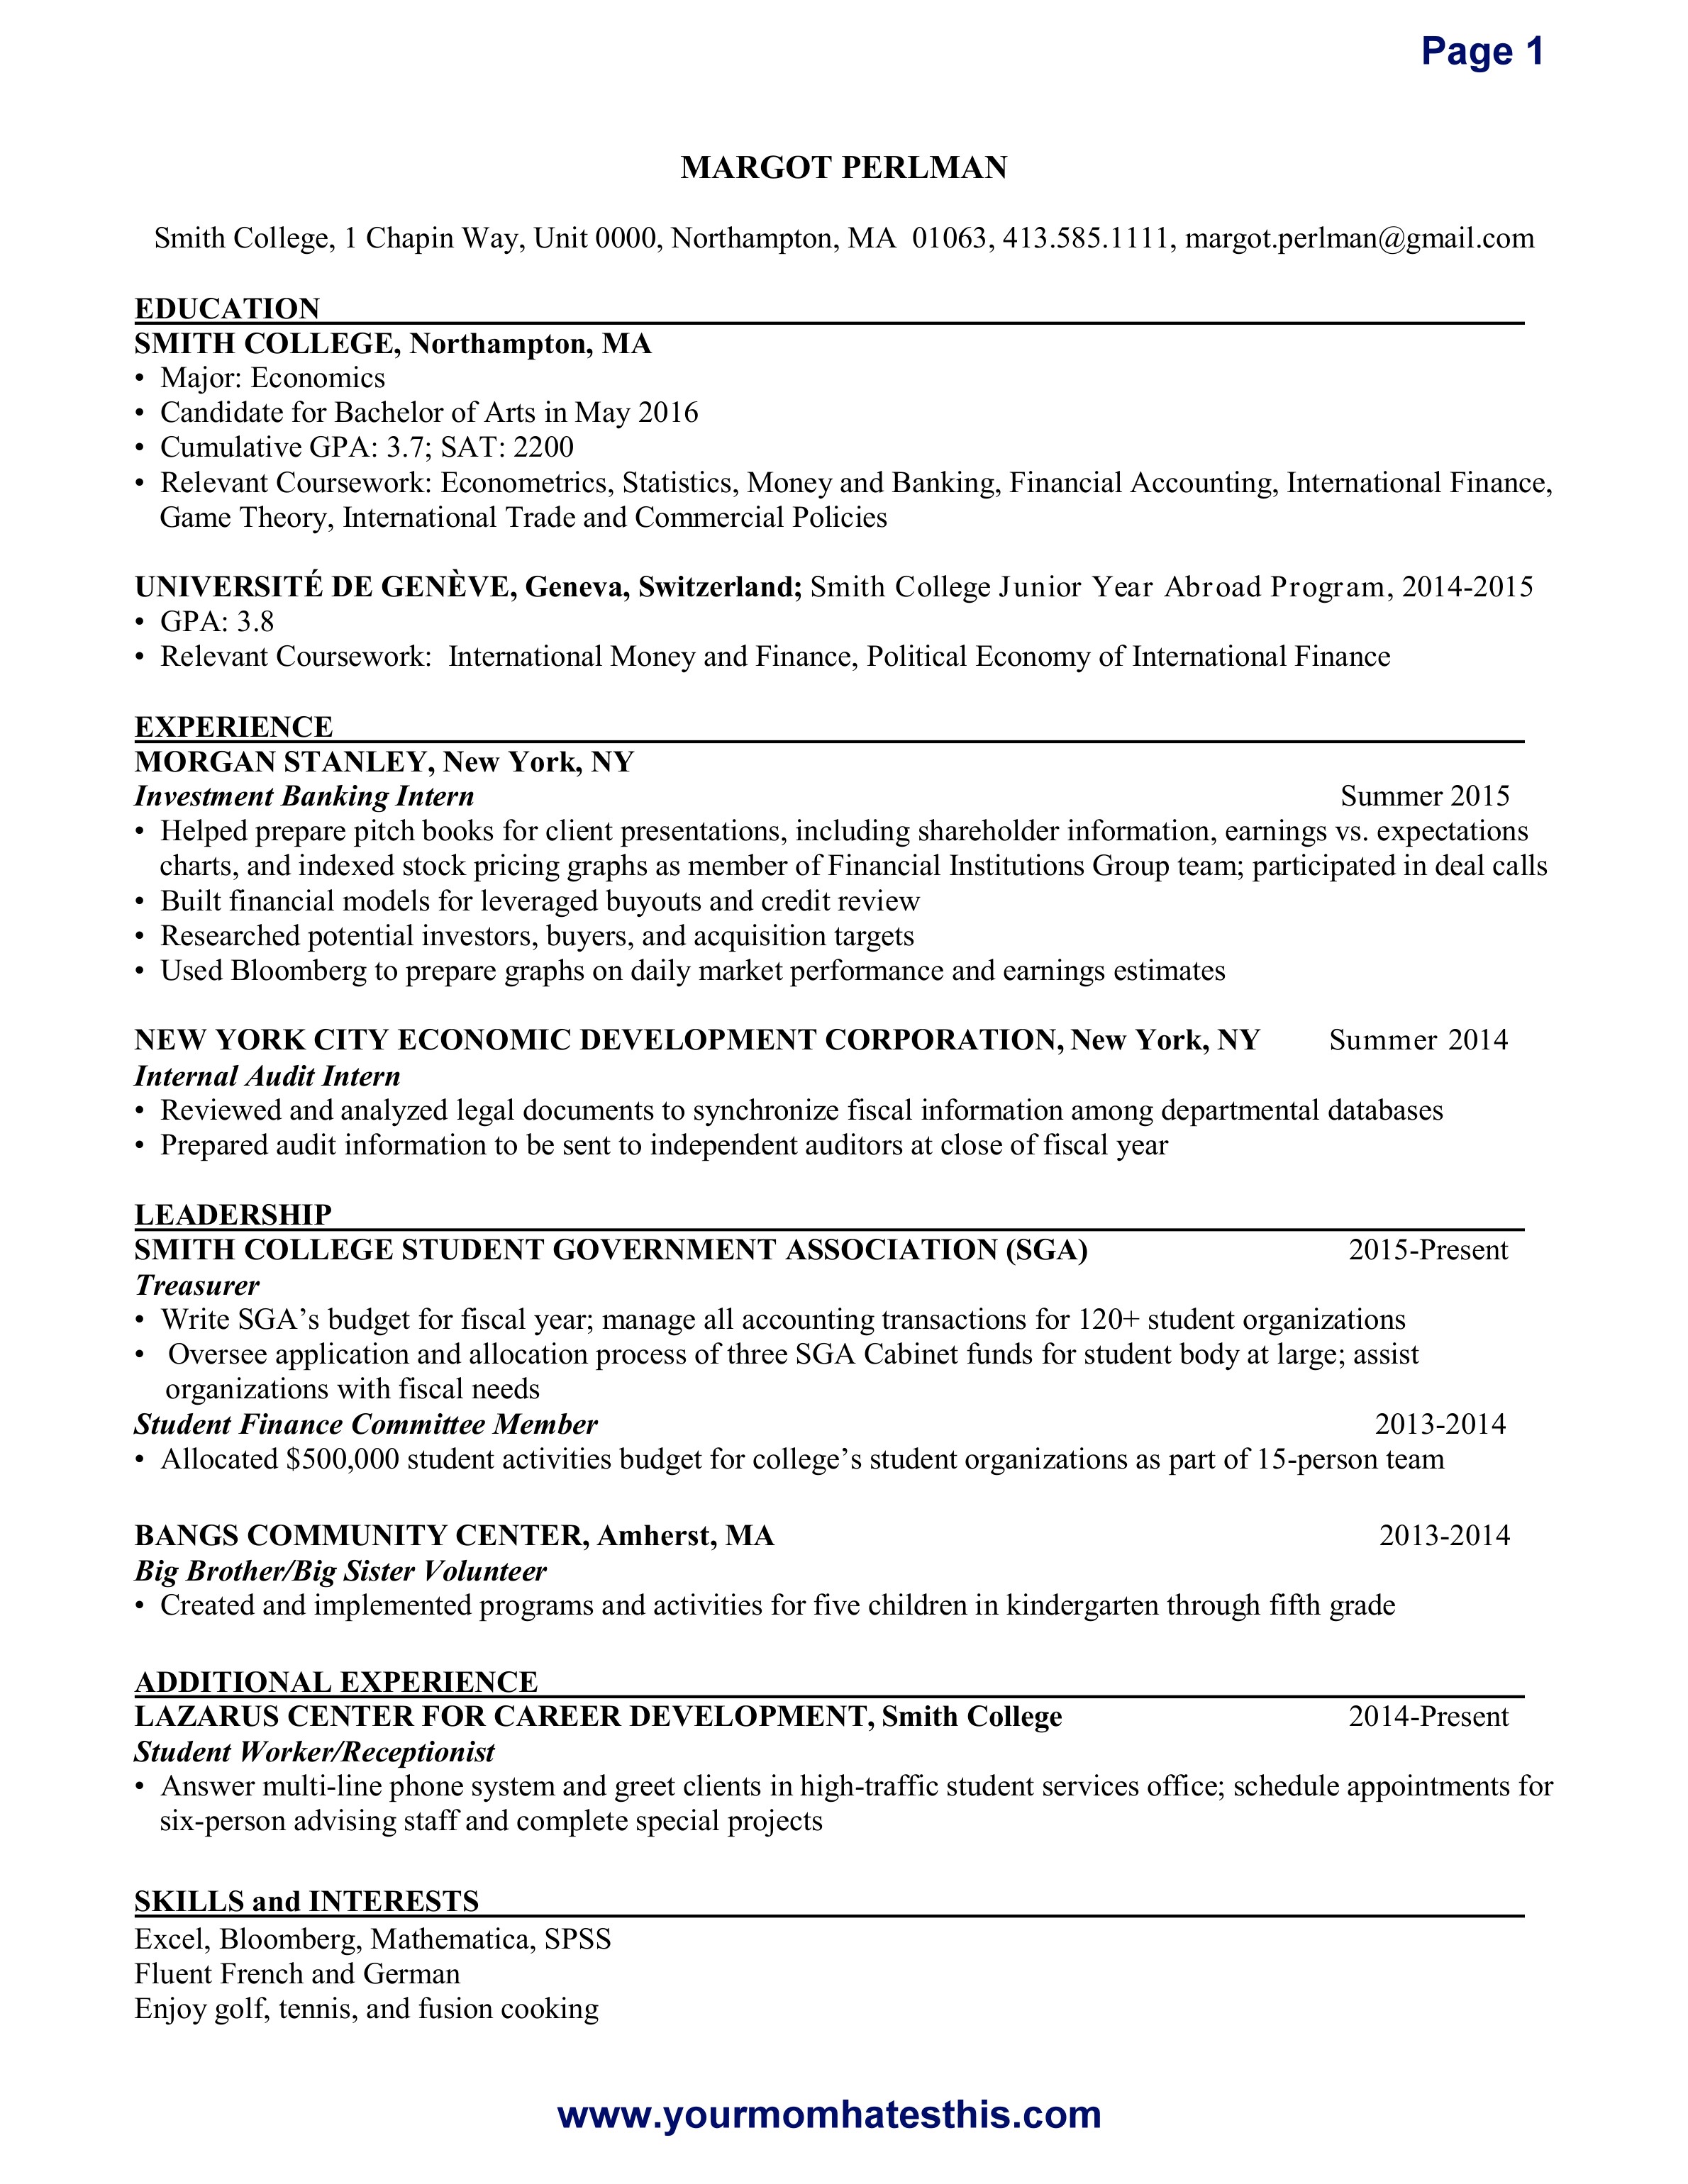 standard resume format resume templates